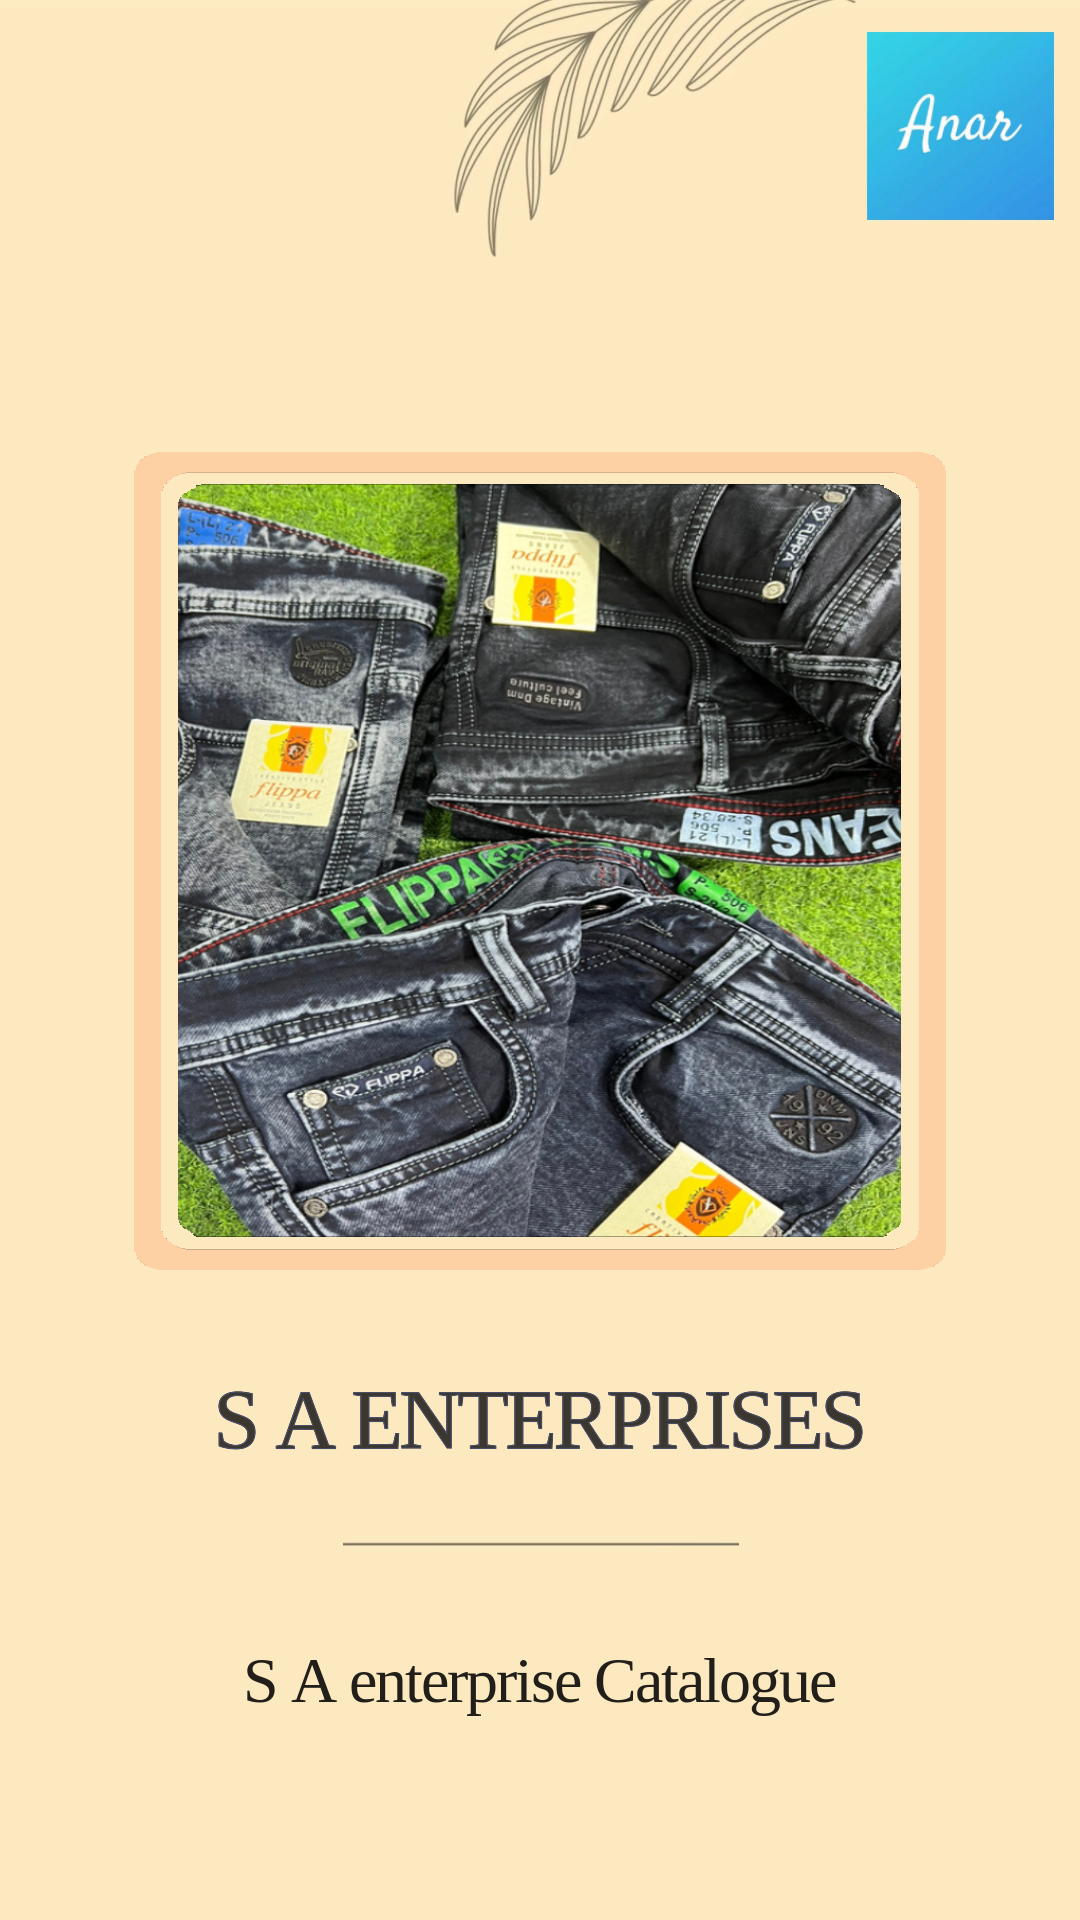 Thumbnail of video titled S A enterprise